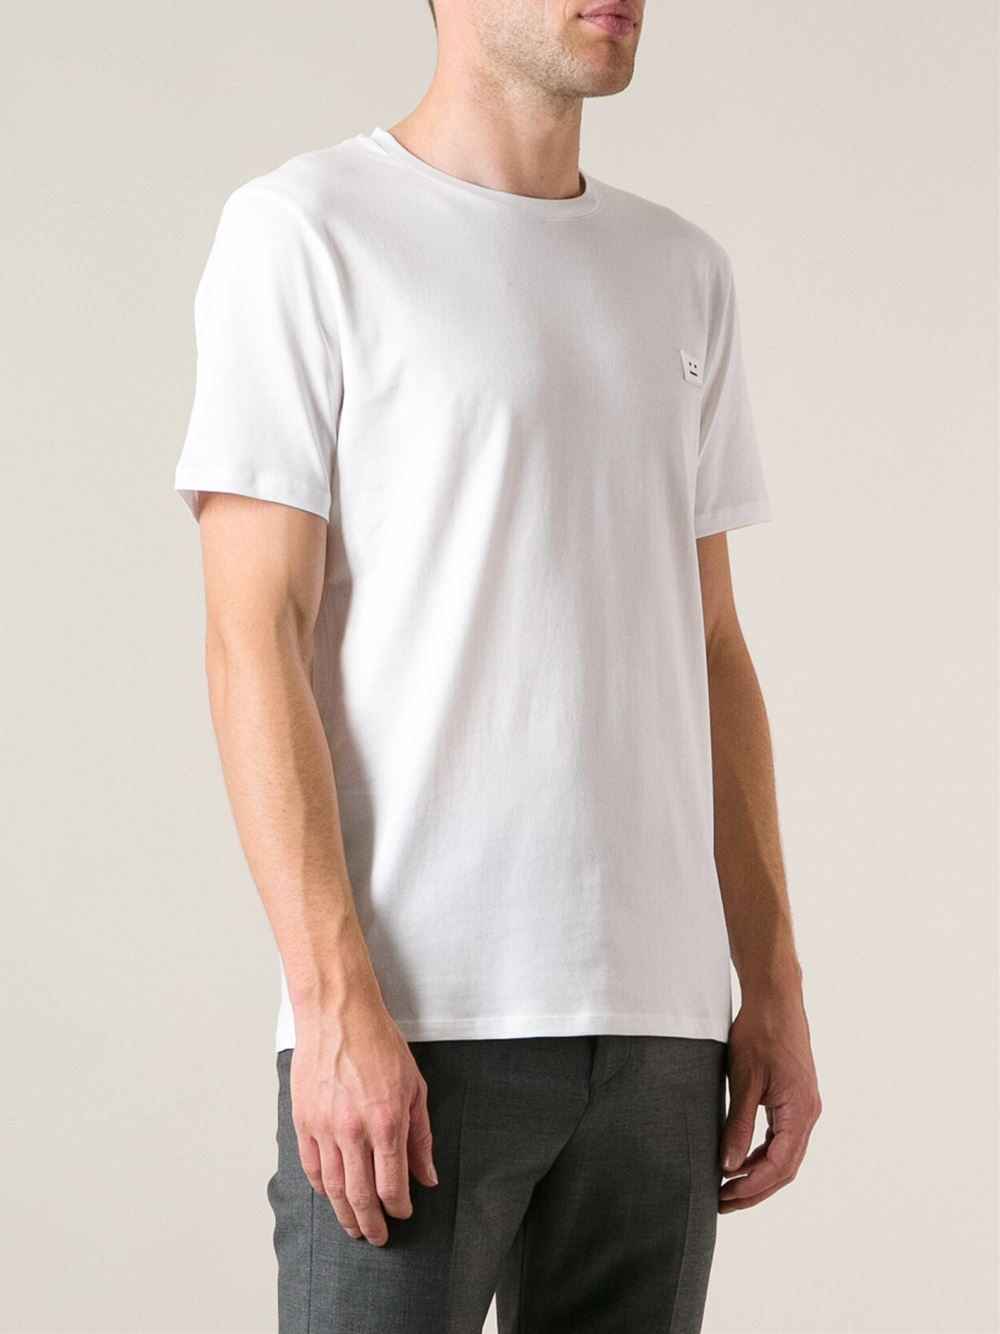 Lyst - Acne Studios 'Measure-Face Badge' T-Shirt in White for Men